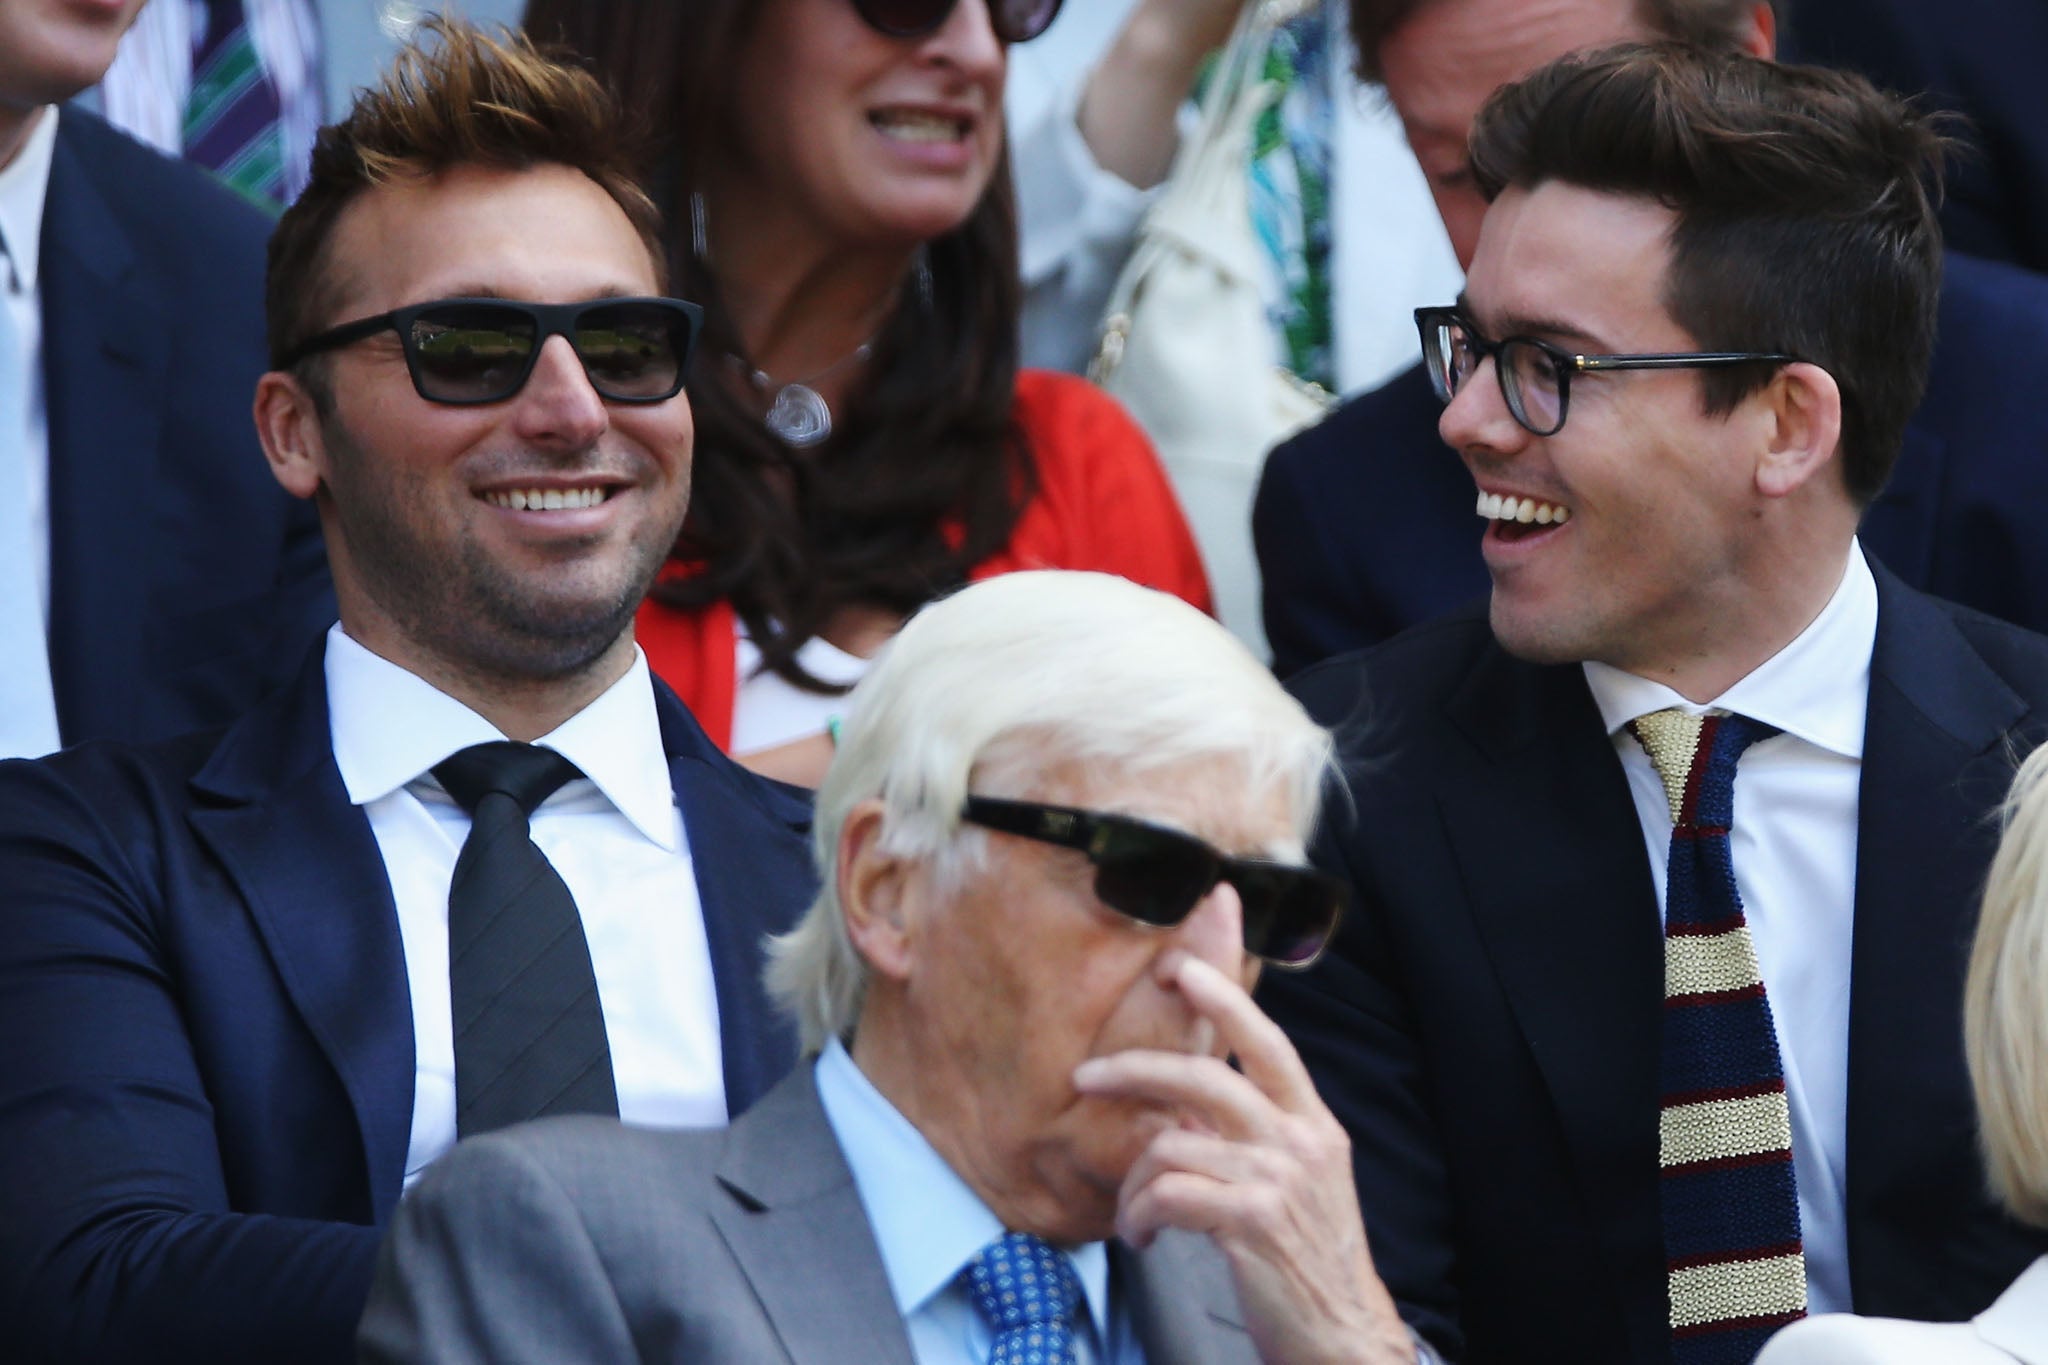 Ian Thorpe and friend sitting behind Sir Michael Parkinson at Wimbledon last week